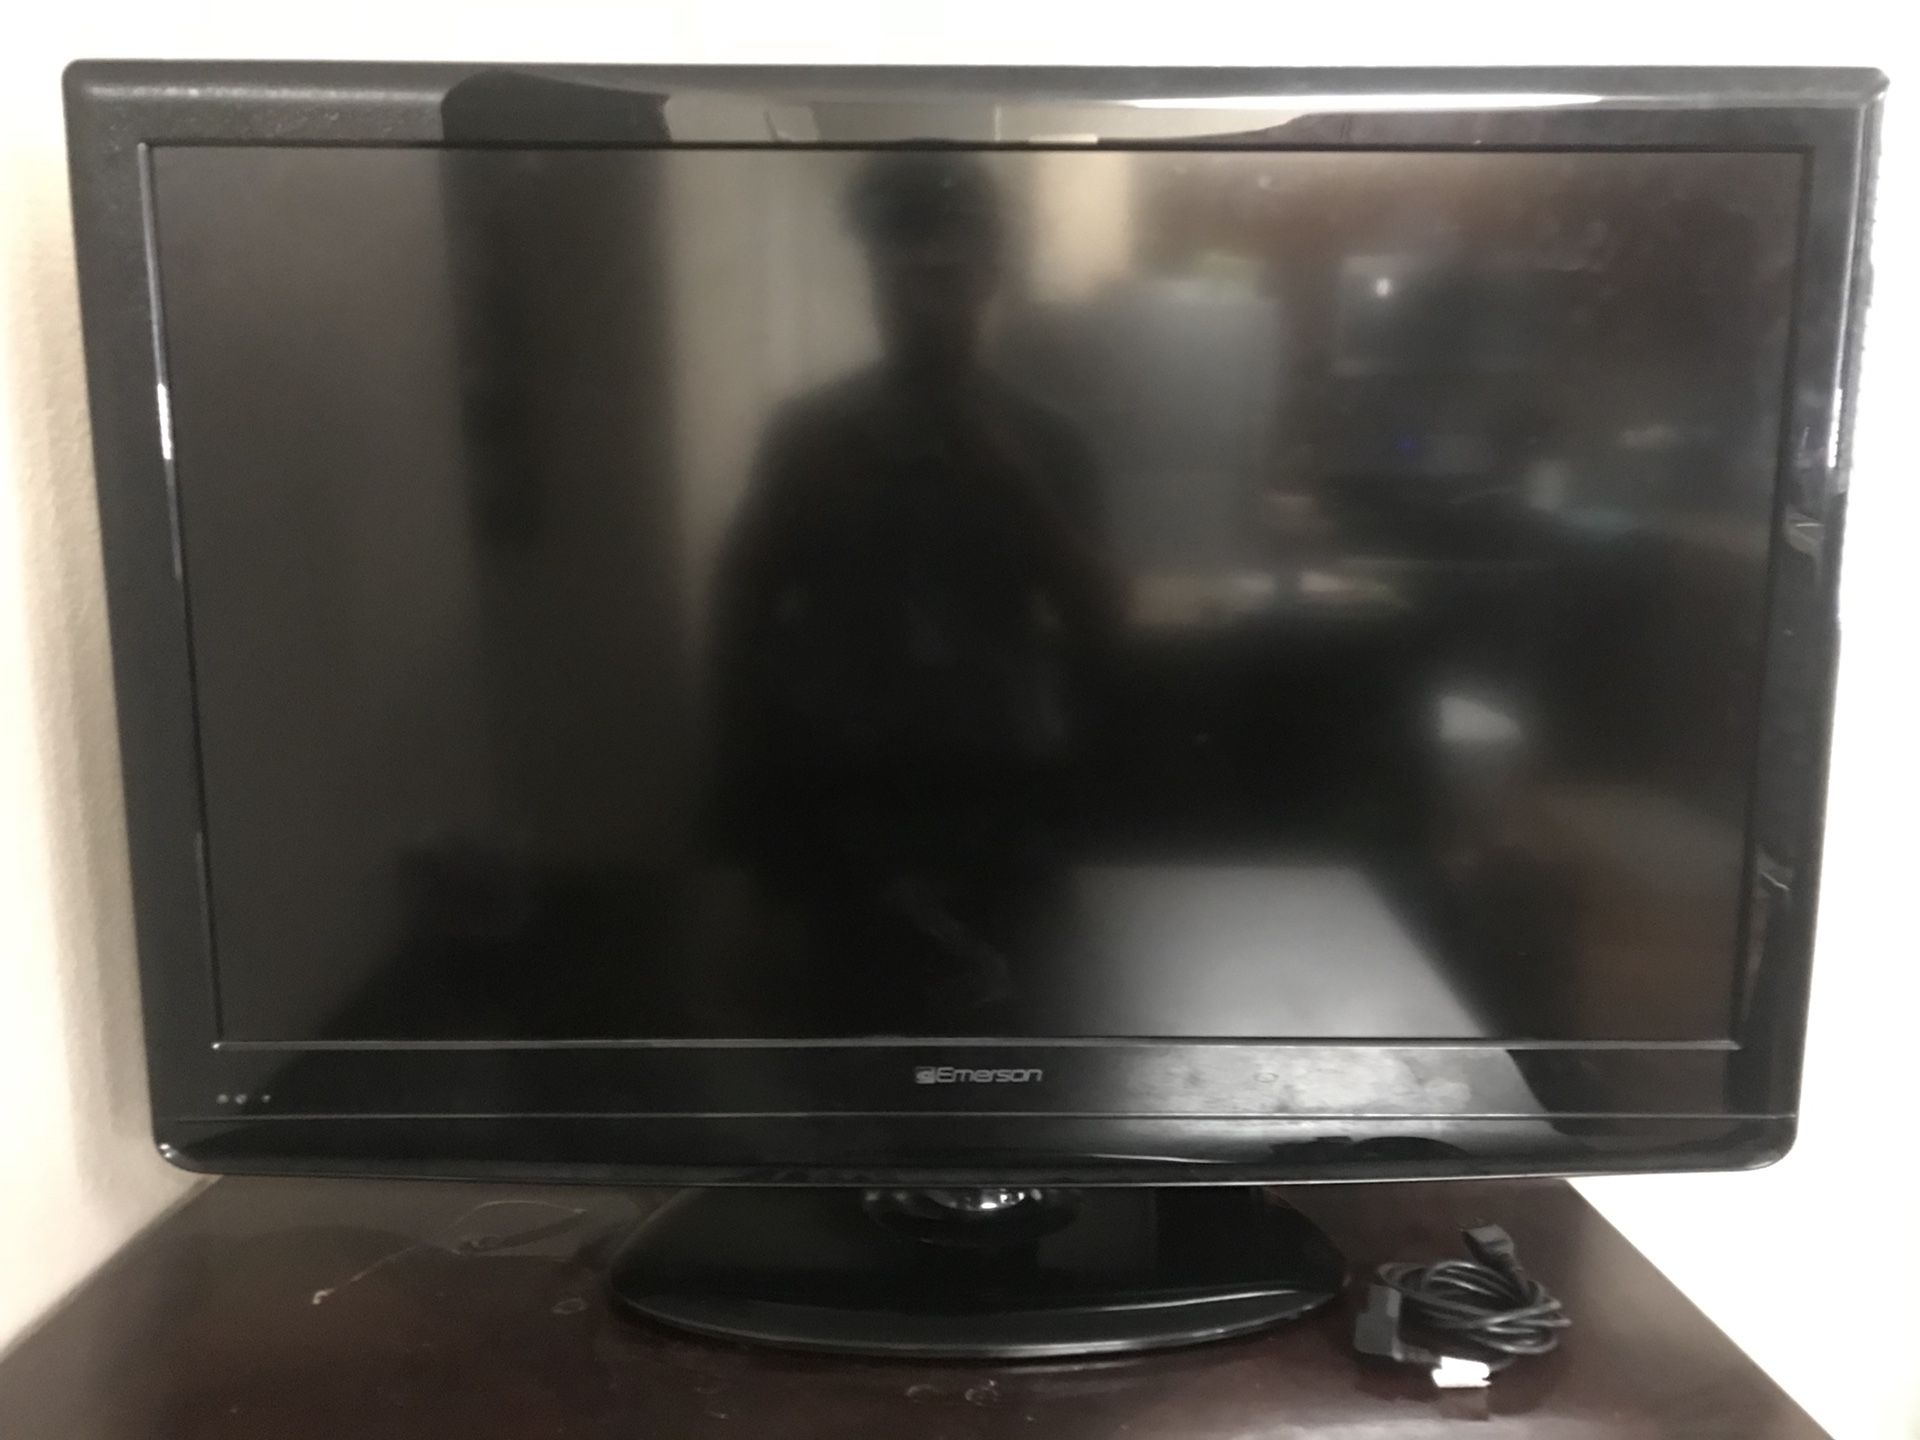 42 inch Emerson flatscreen TV